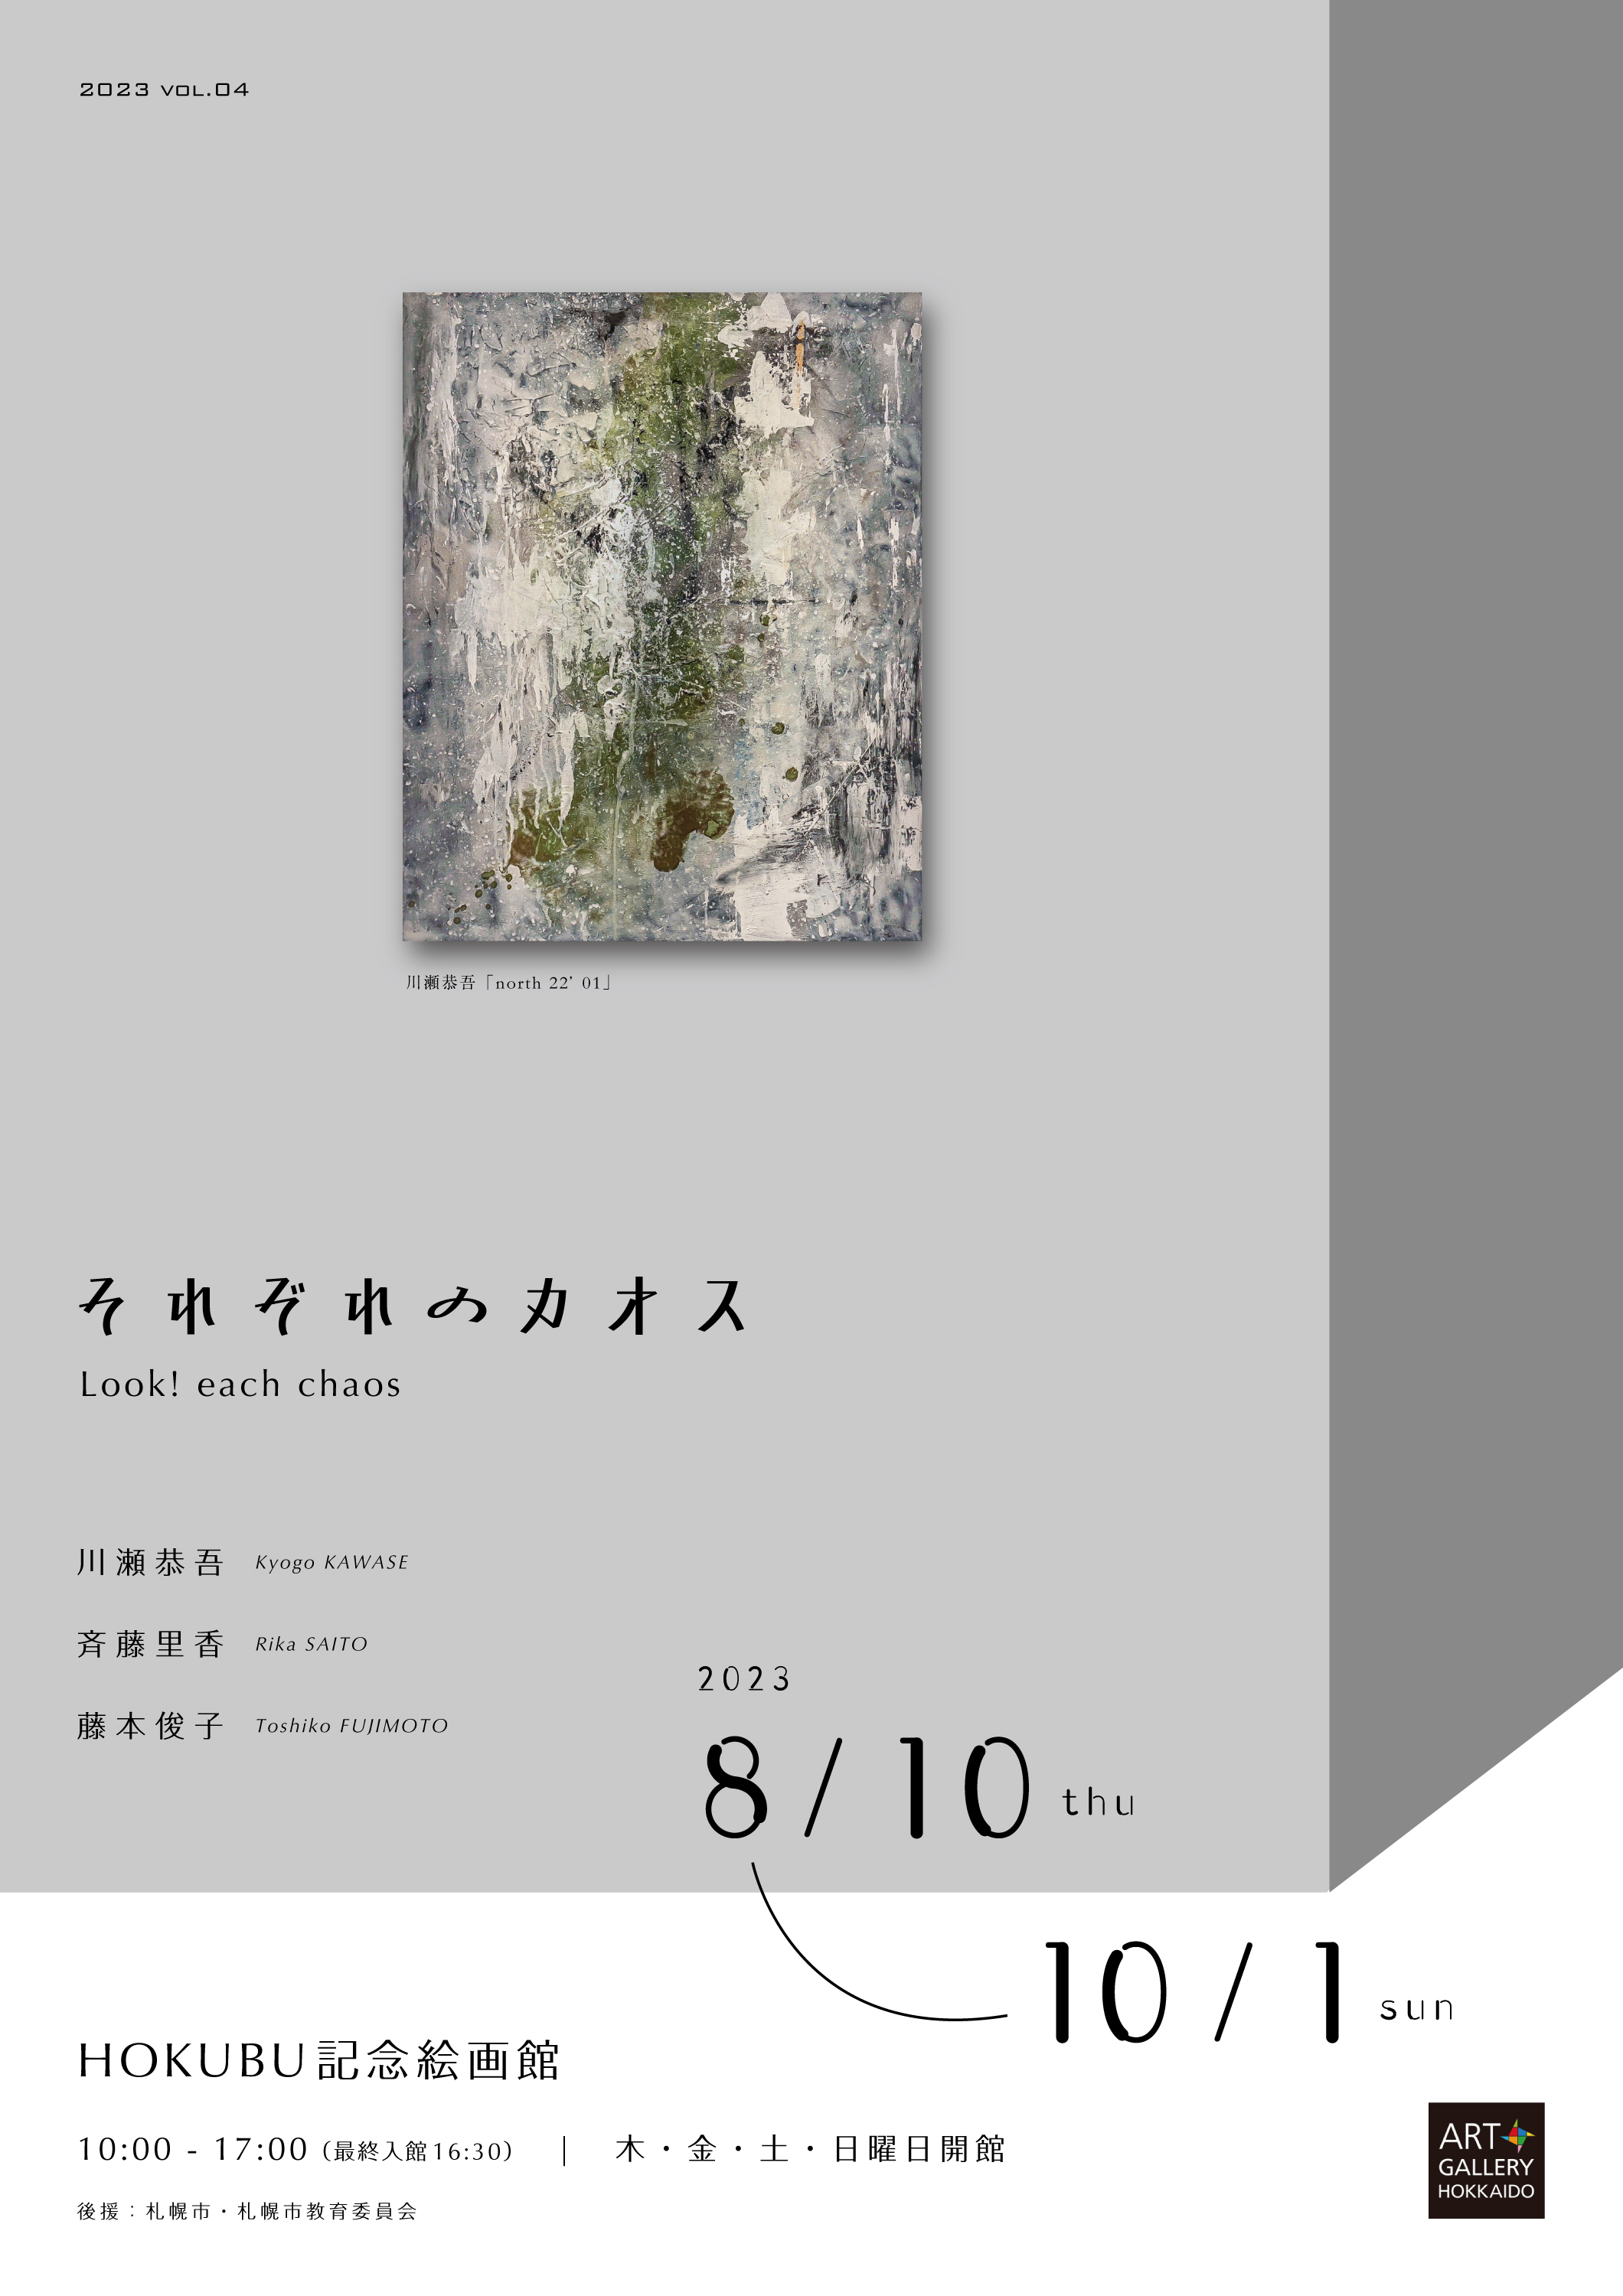 HOKUBU記念絵画館「それぞれのカオス」出展のお知らせ